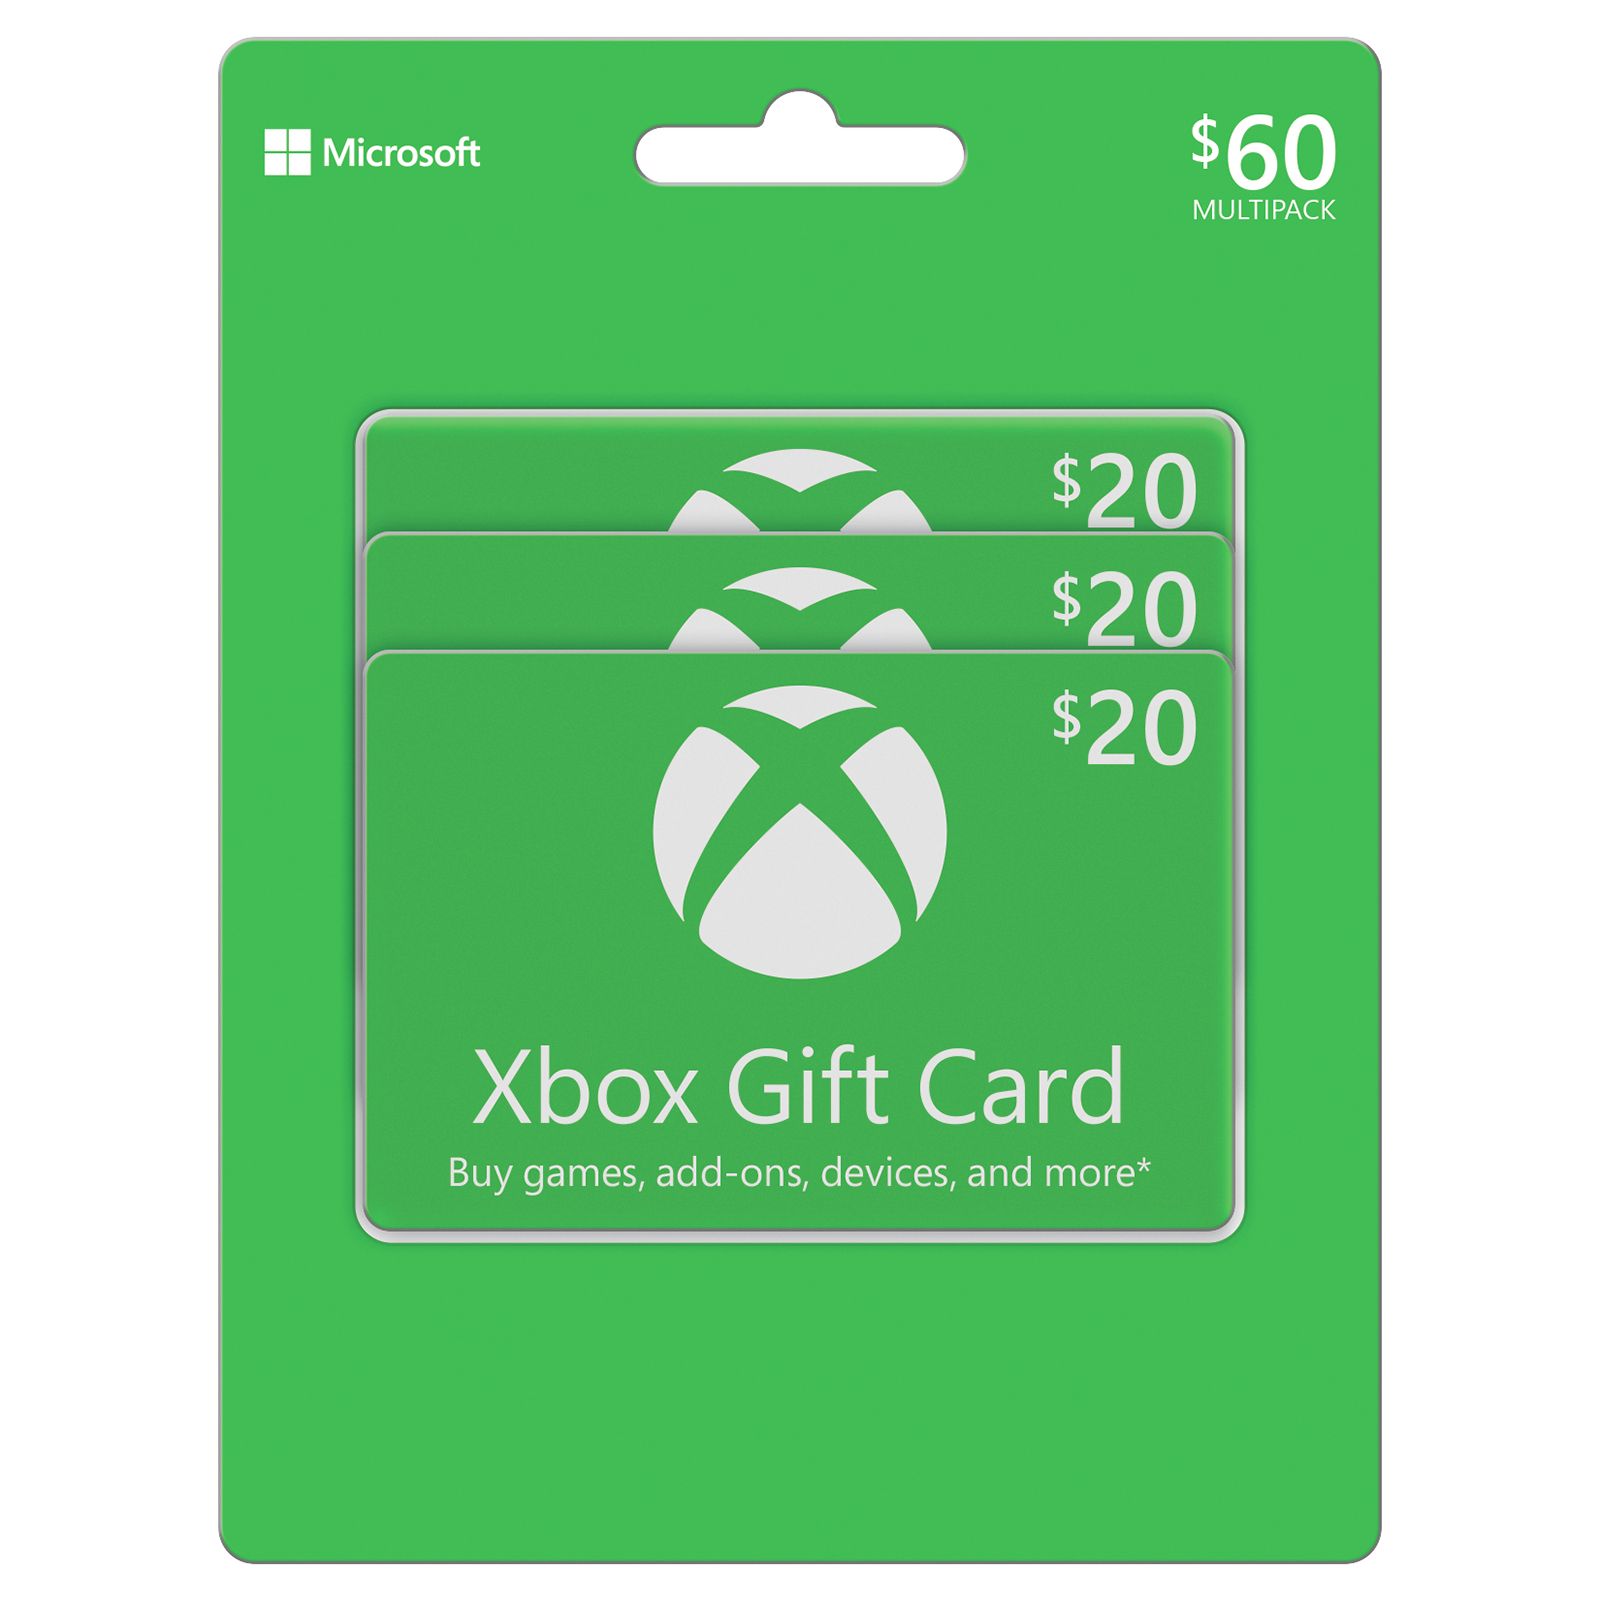 How Do I Check My Xbox Gift Card Balance?